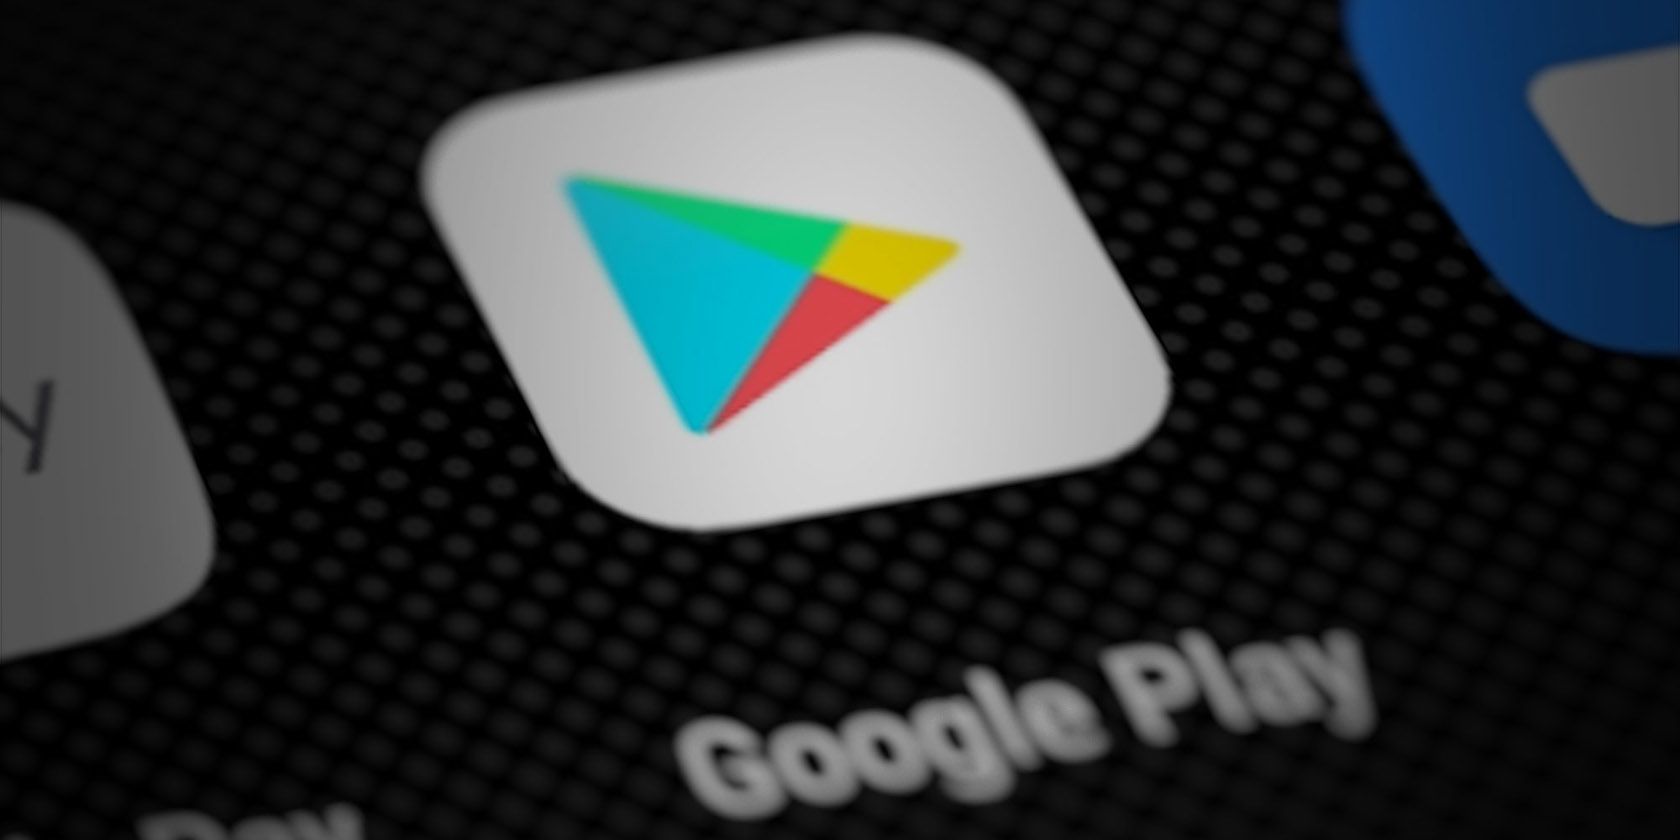 The Google Play app icon